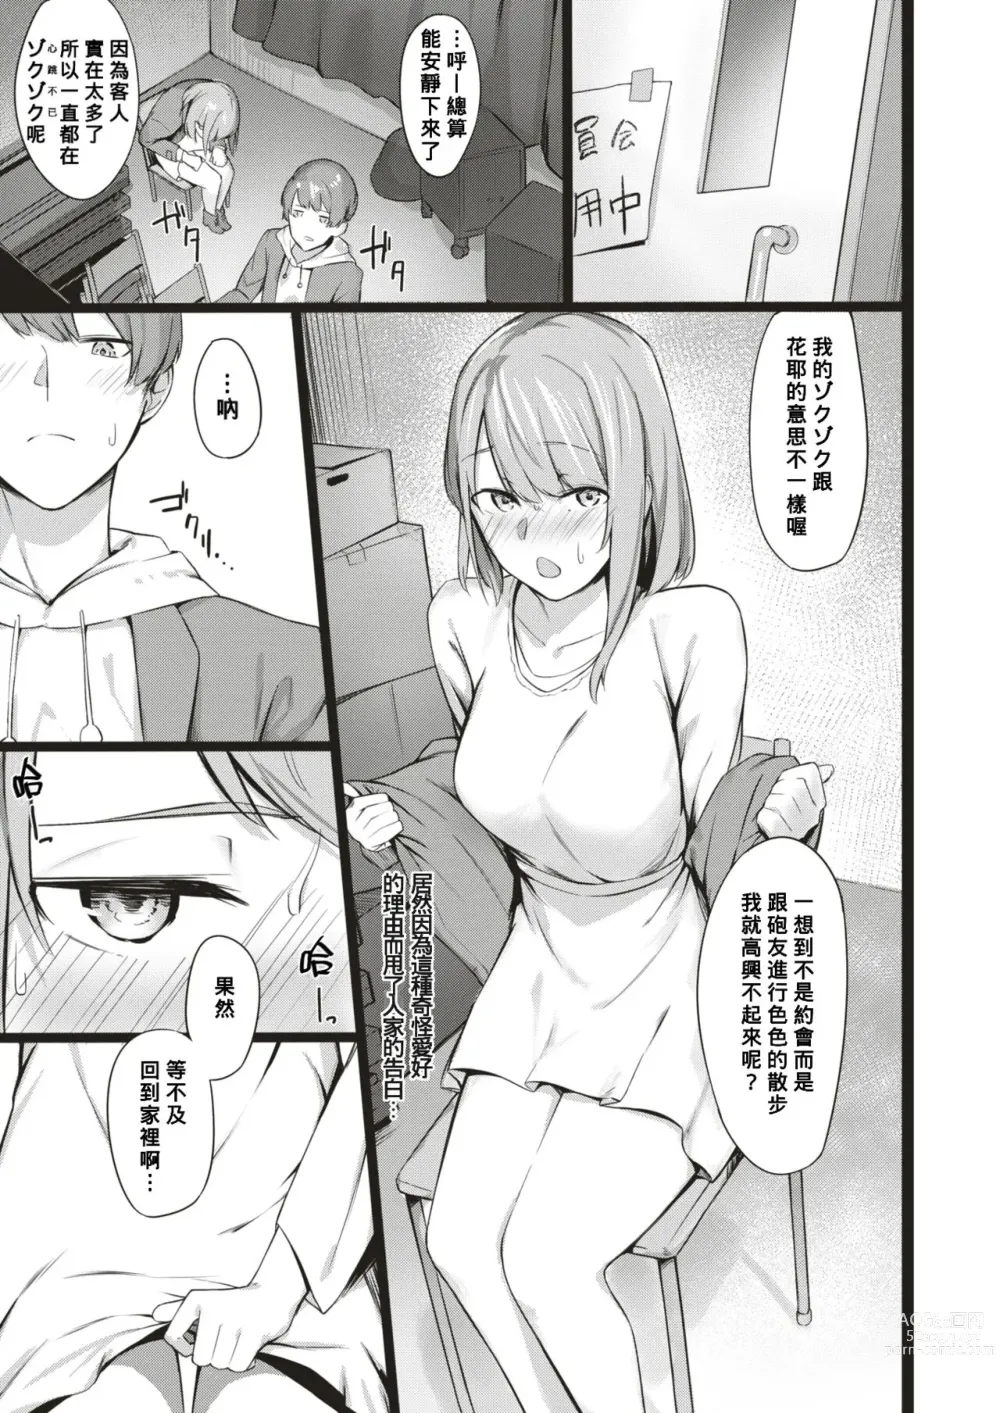 Page 5 of manga Koukai Kakurenbo - What is inside the secret hole?